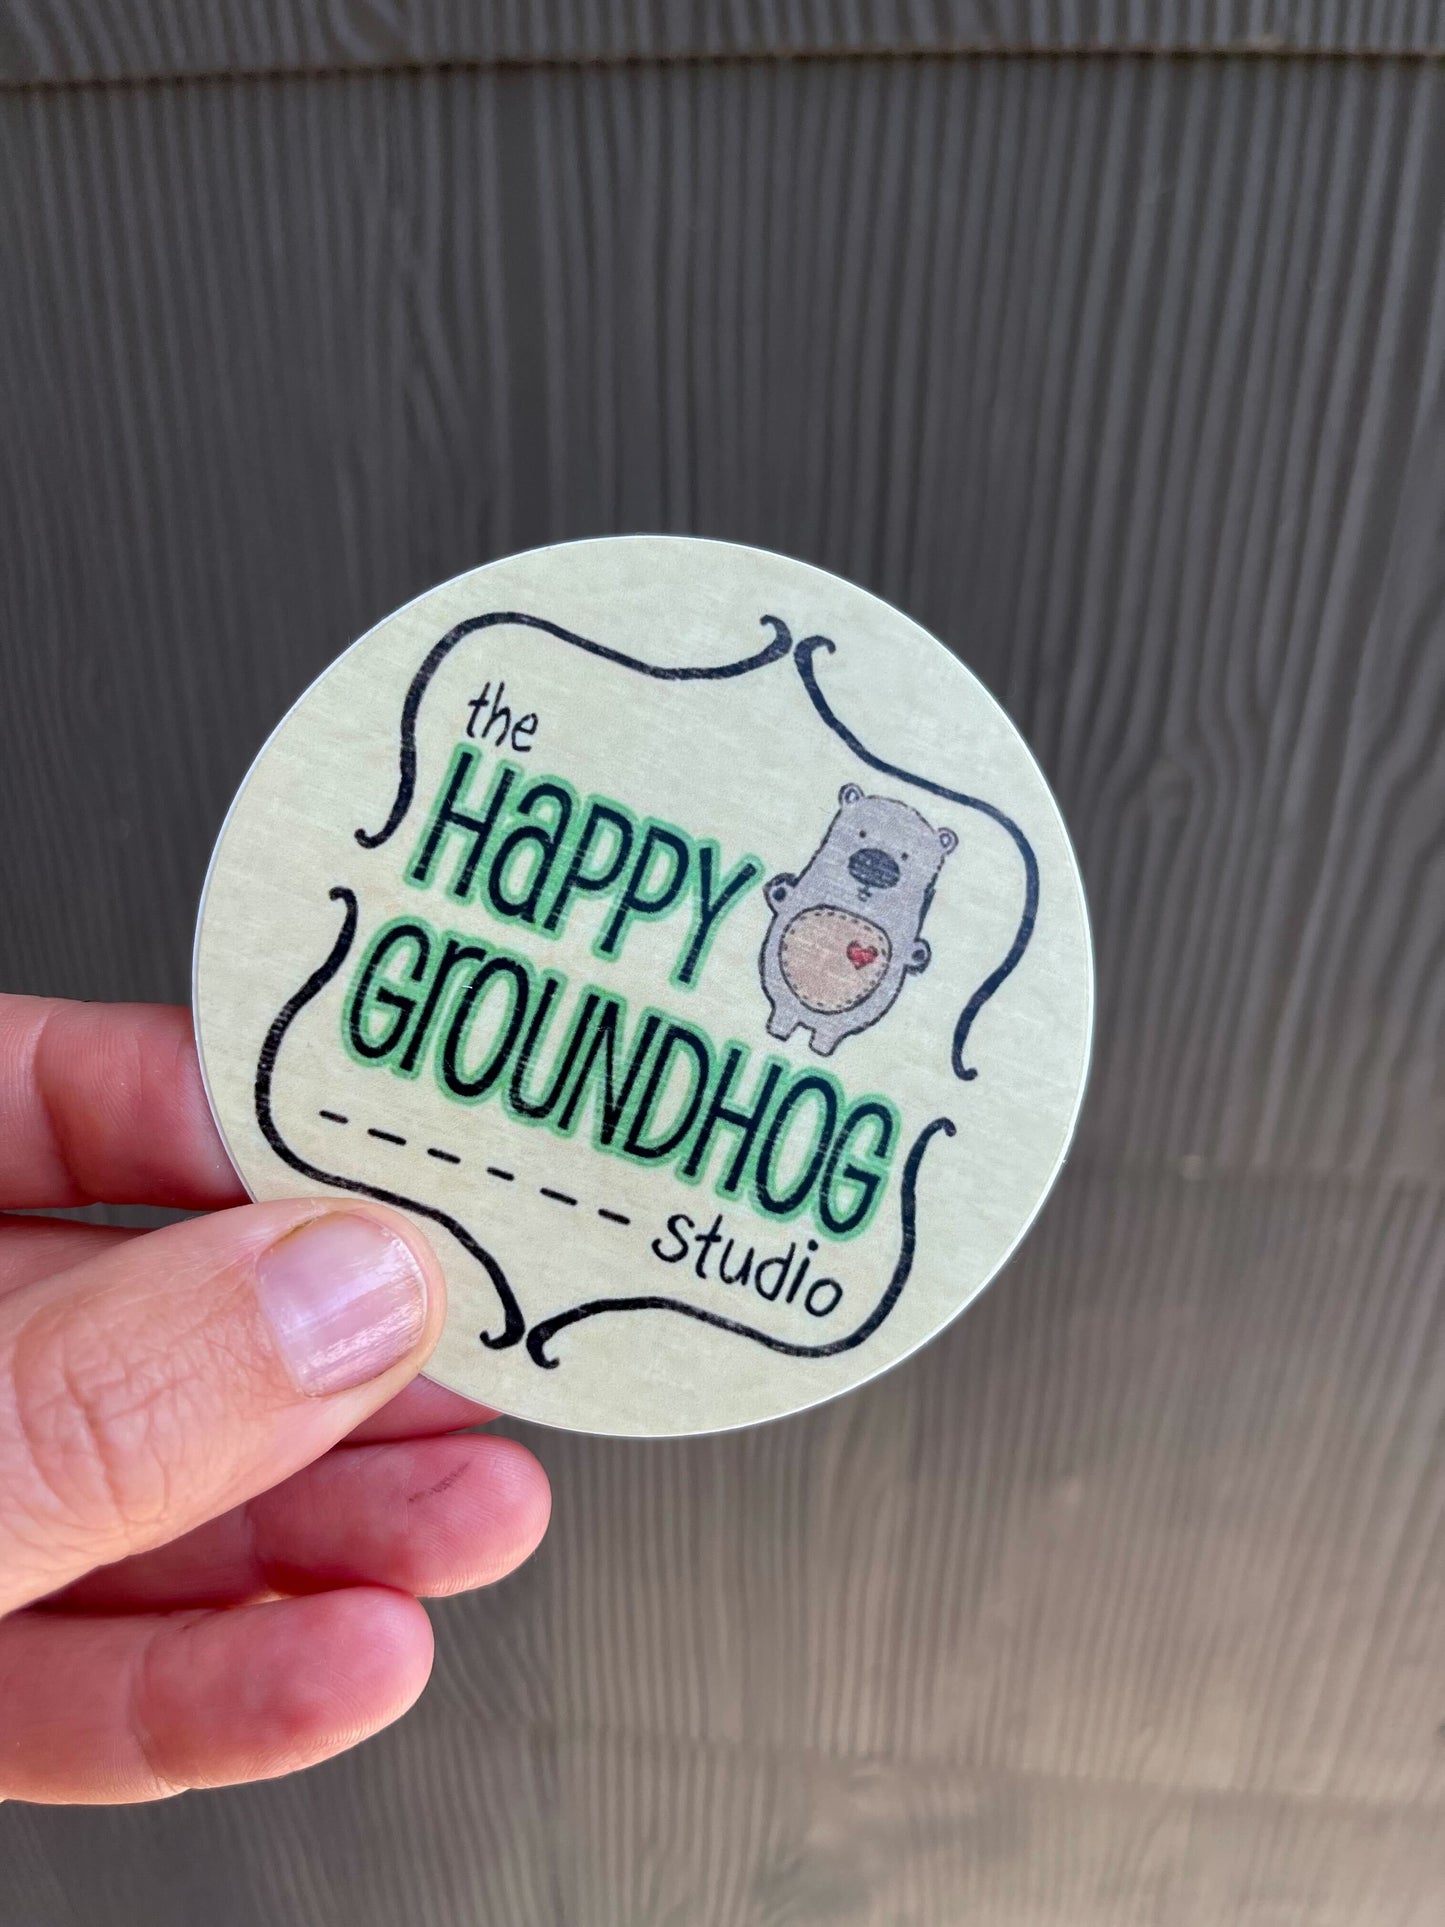 The Happy Groundhog Studio Sticker